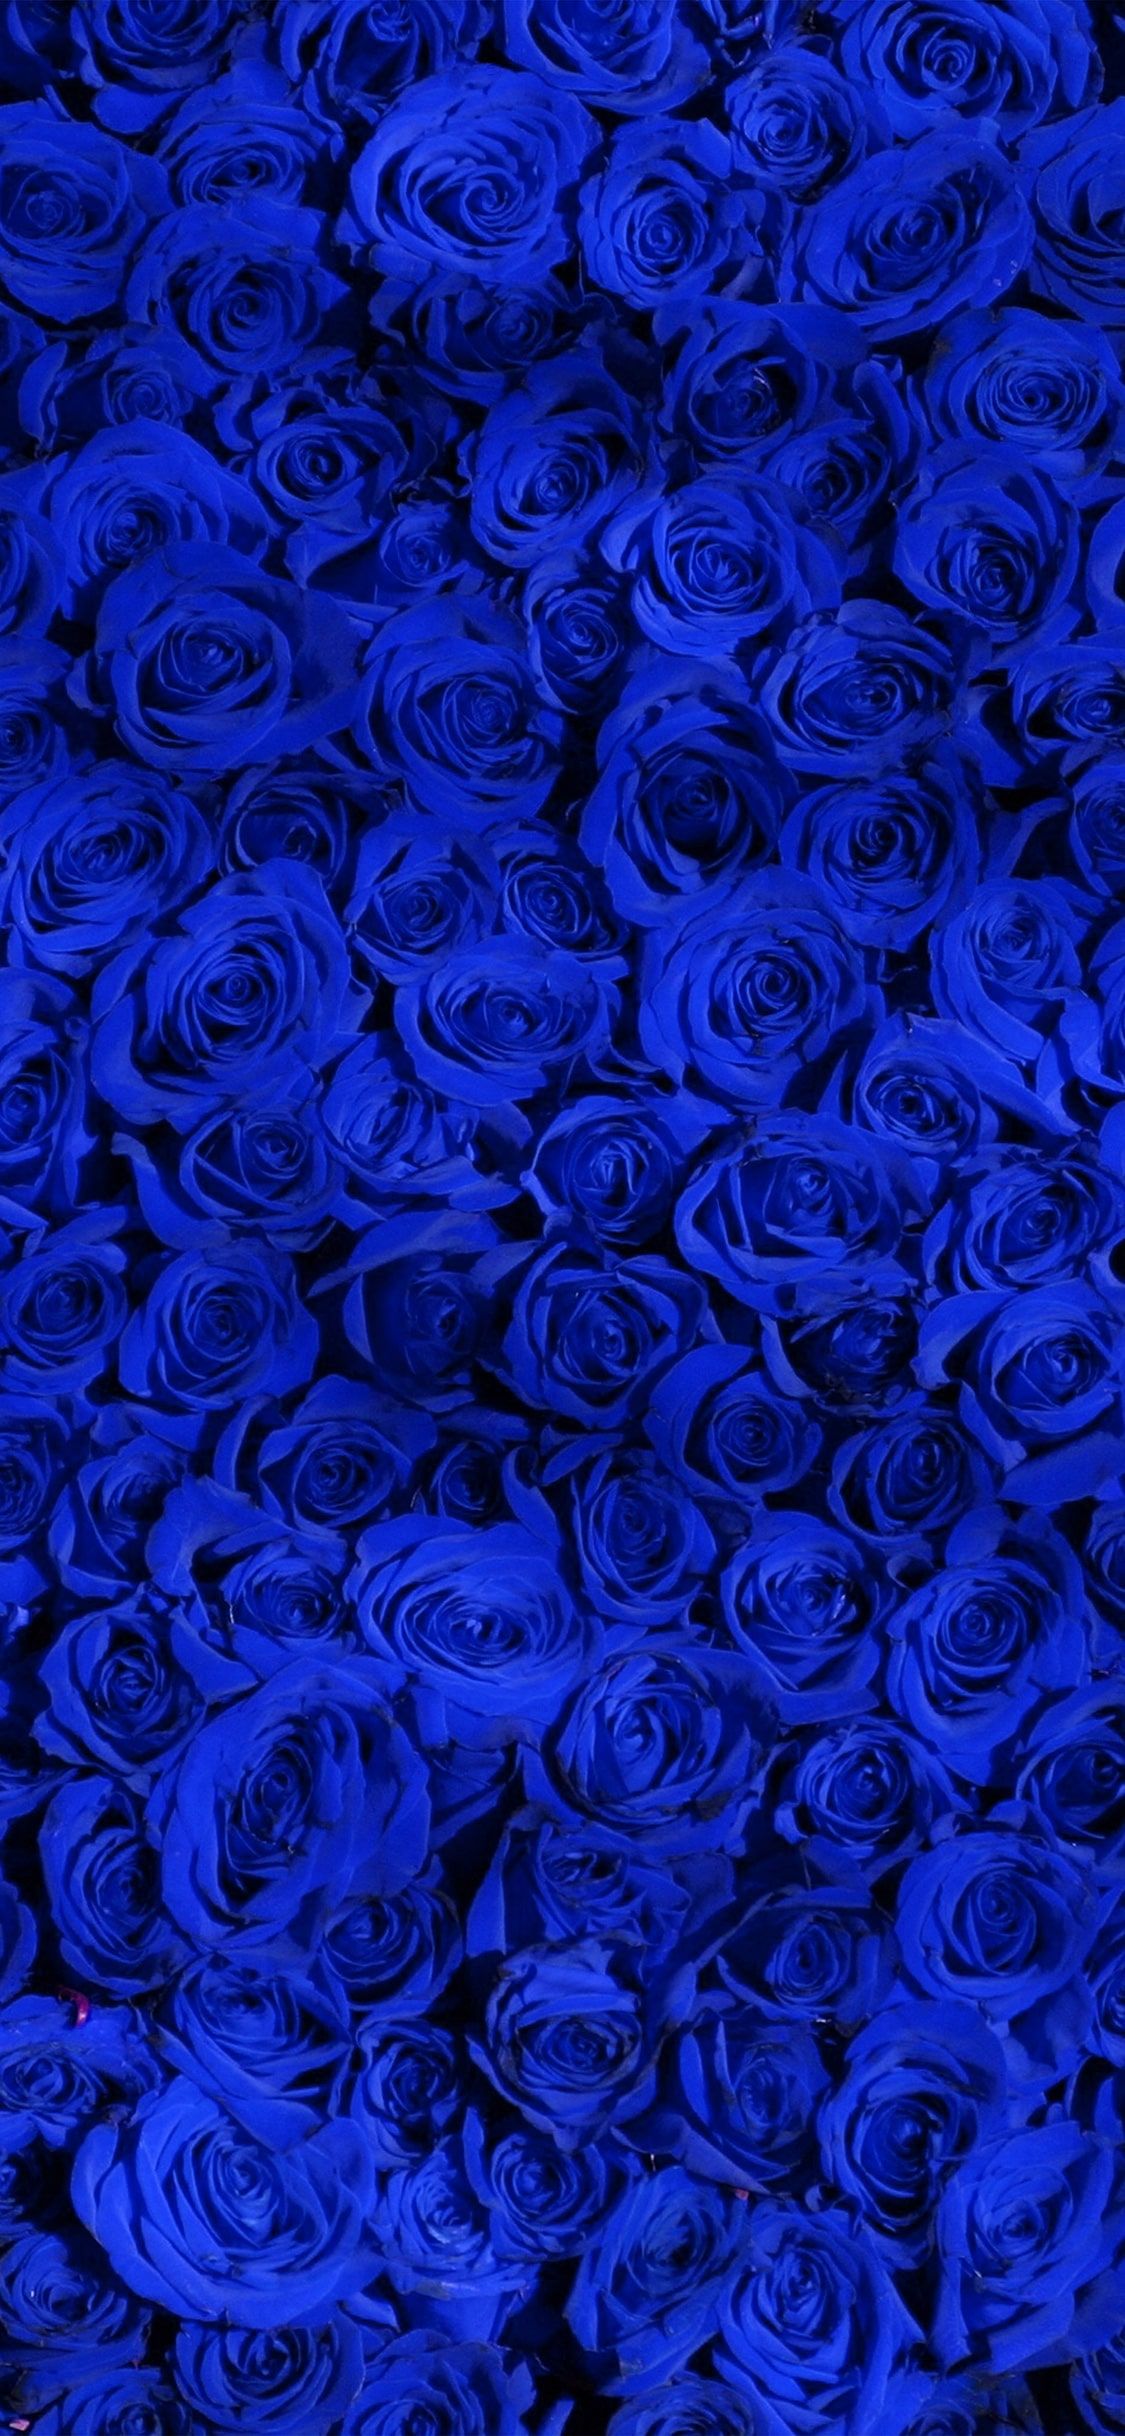 Blue roses wallpaper for your phone or desktop background. - Garden